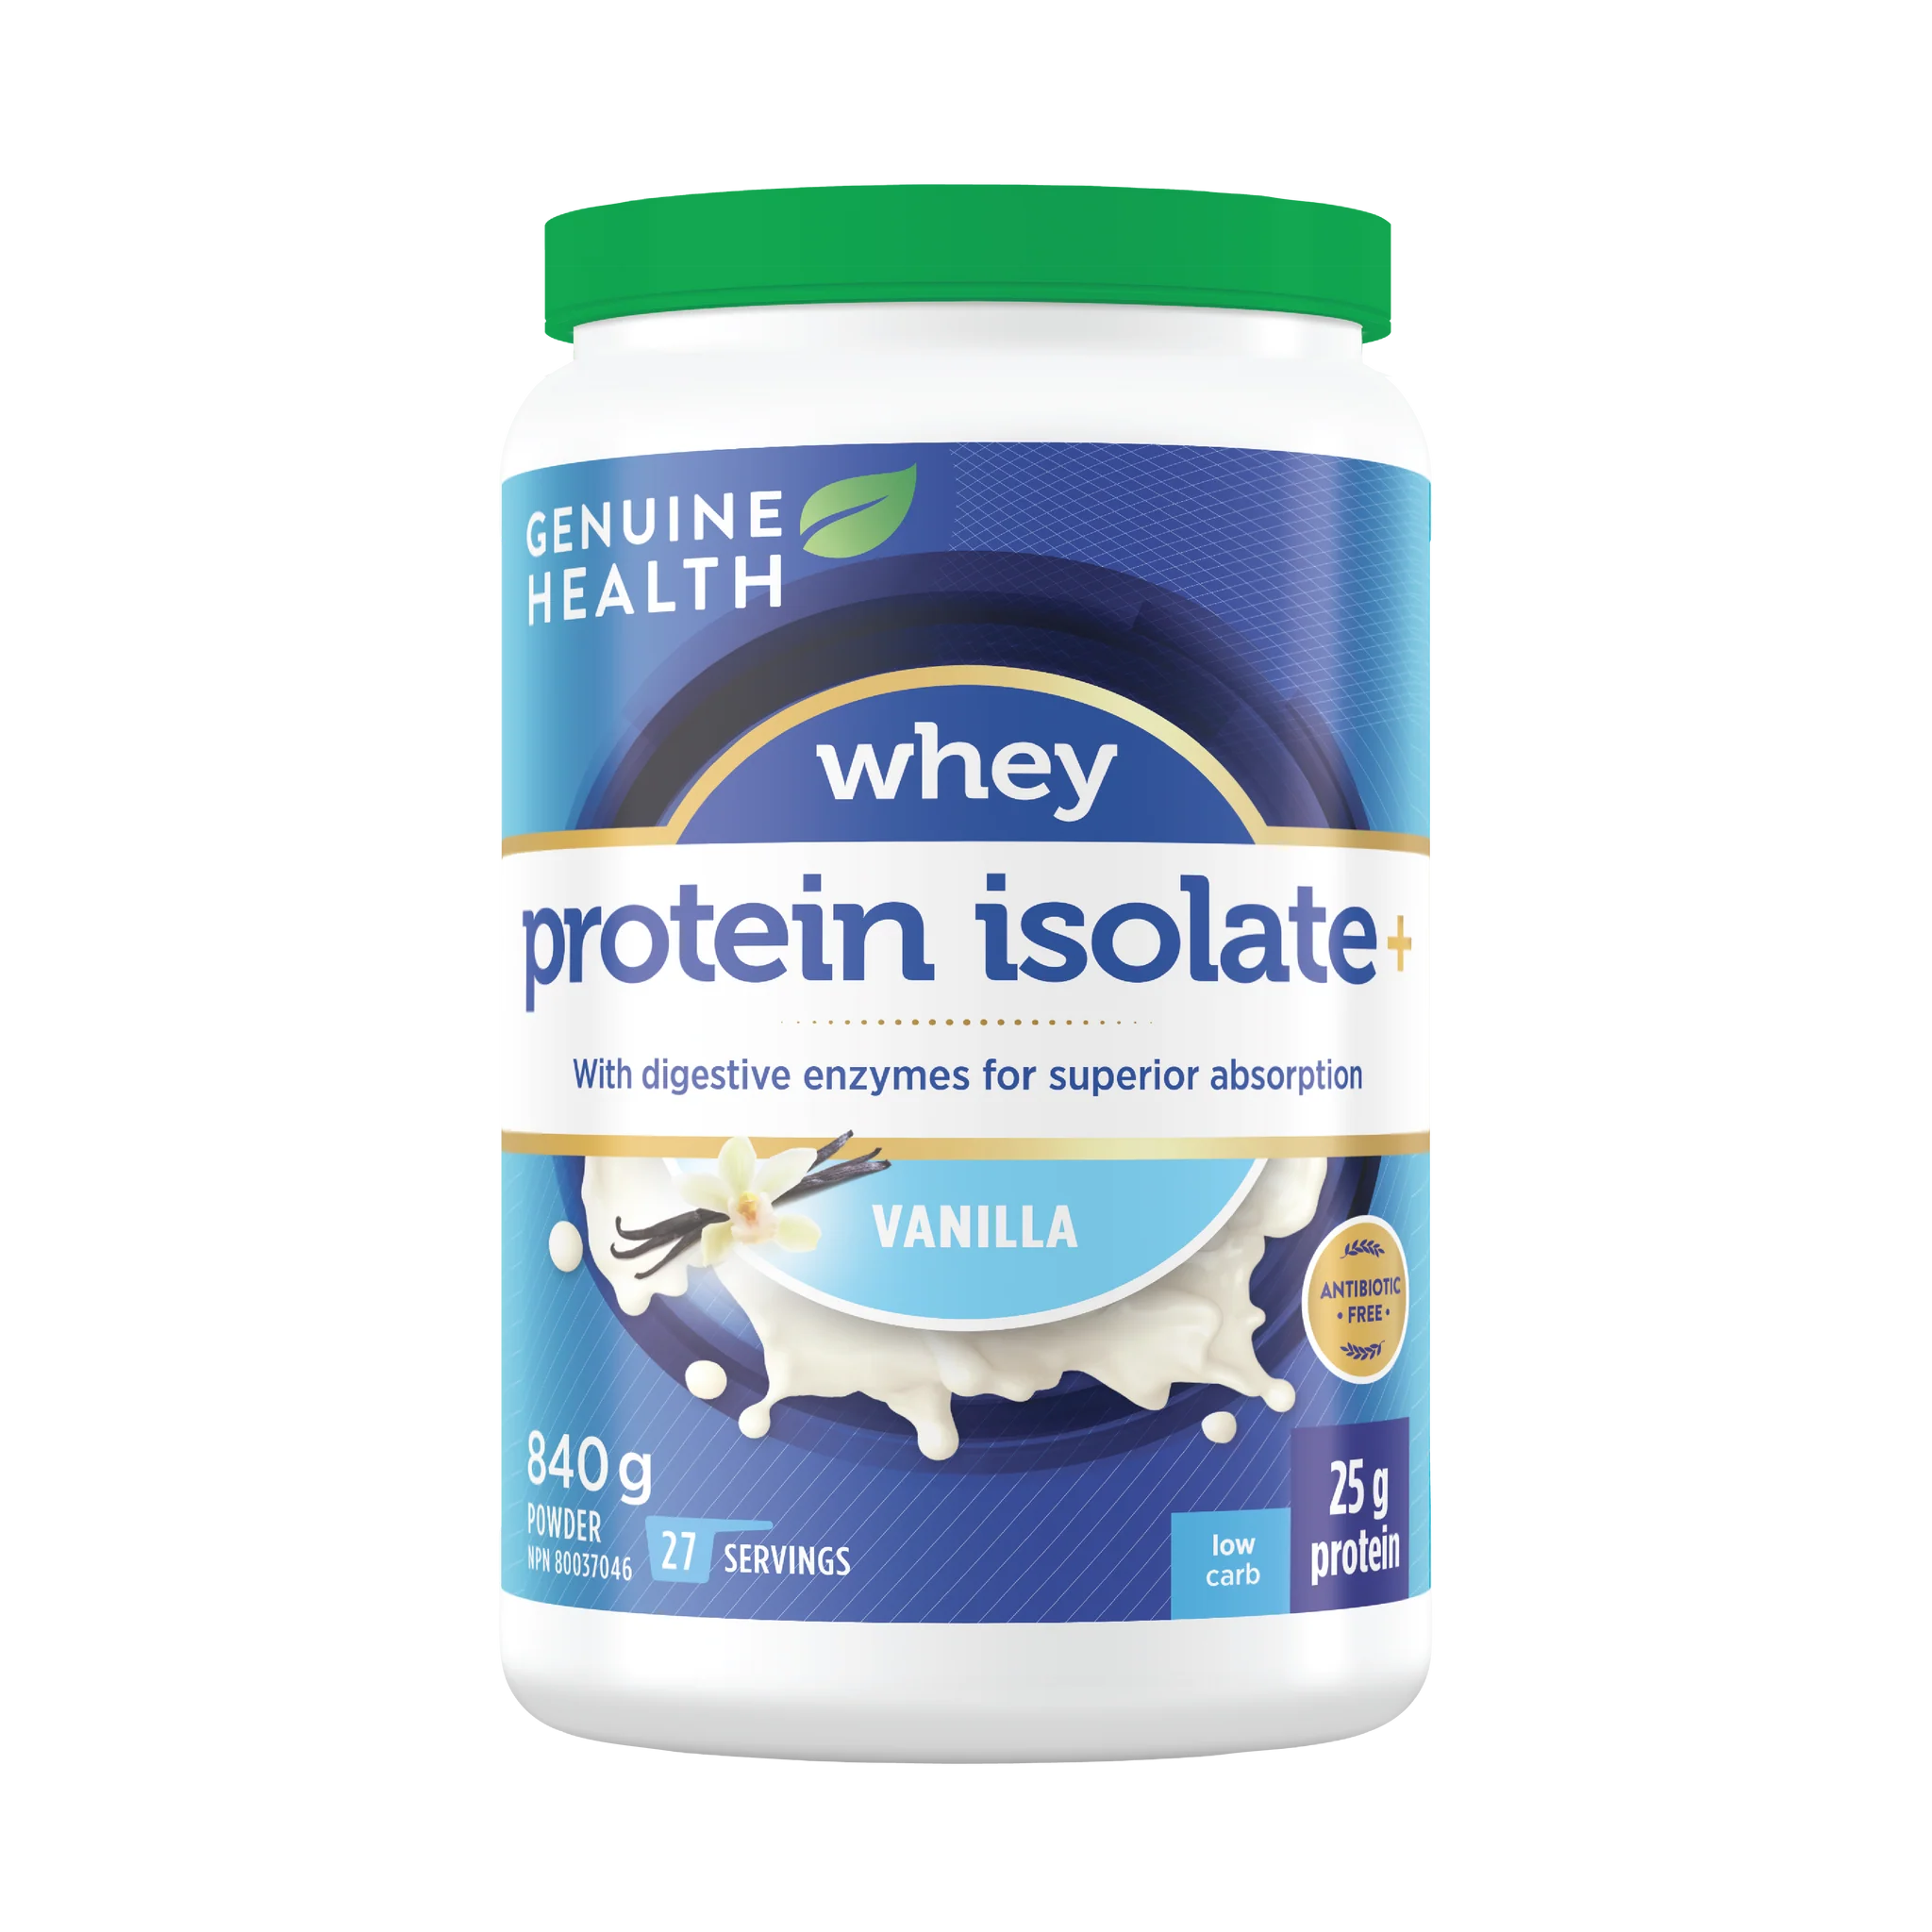 Genuine Health Whey Protein Isolate vanilla (840g)